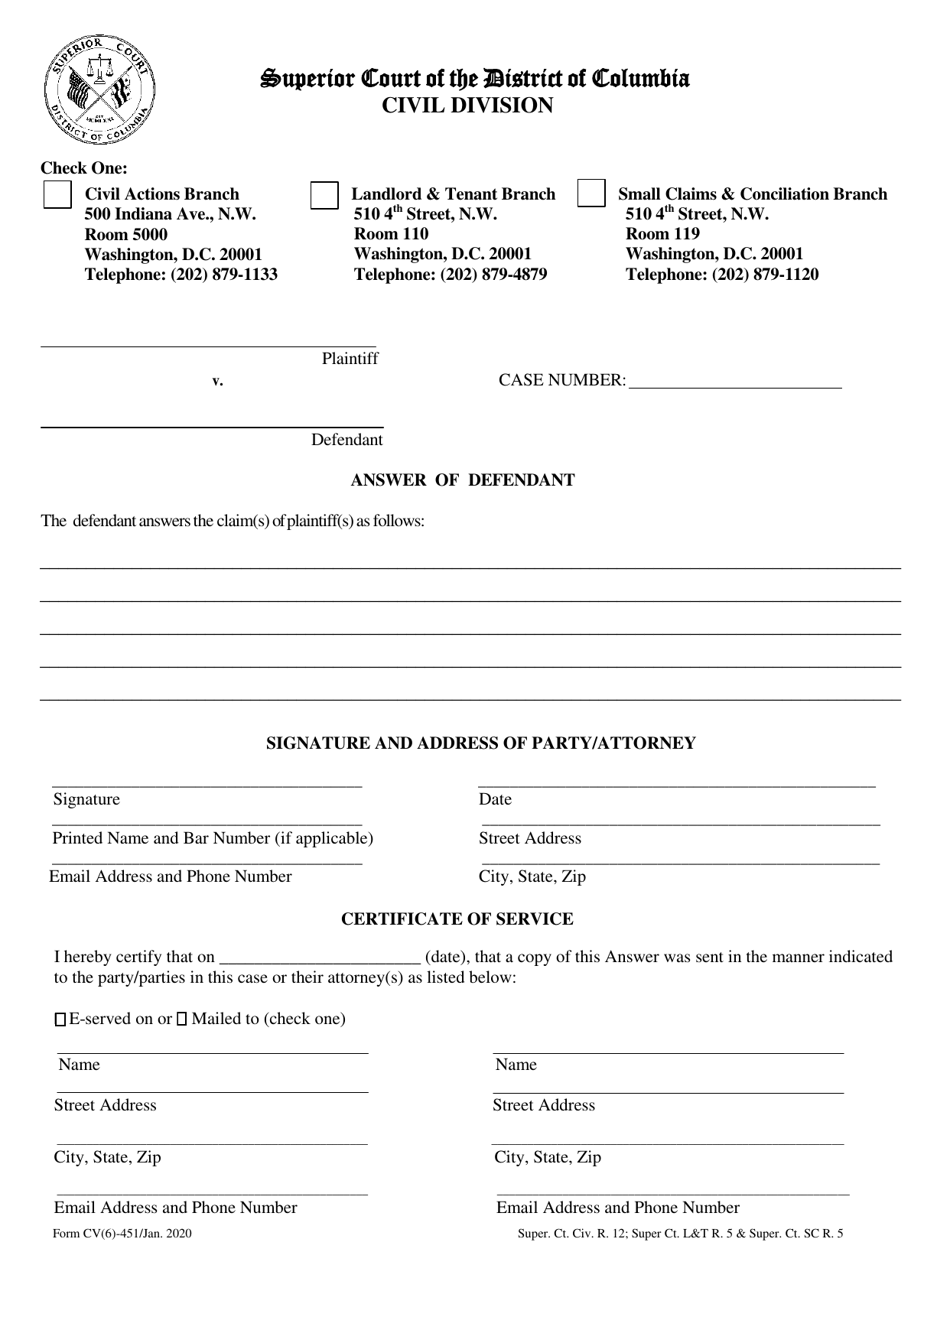 Form CV(6)-451 Answer of Defendant - Washington, D.C., Page 1